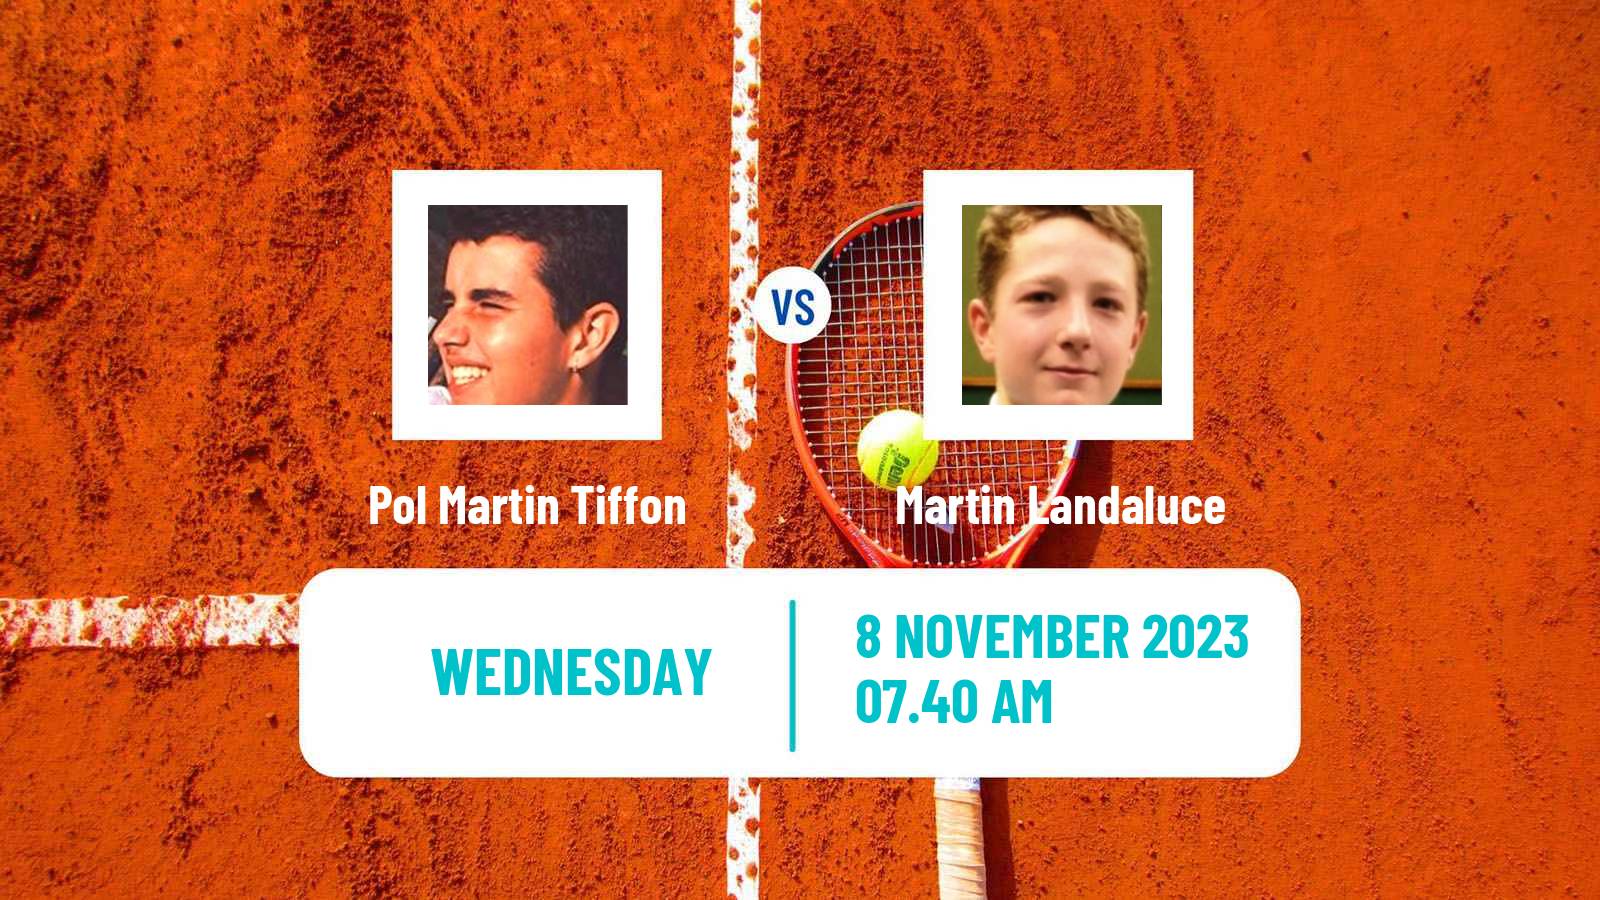 Tennis ITF M25 Benicarlo Men Pol Martin Tiffon - Martin Landaluce